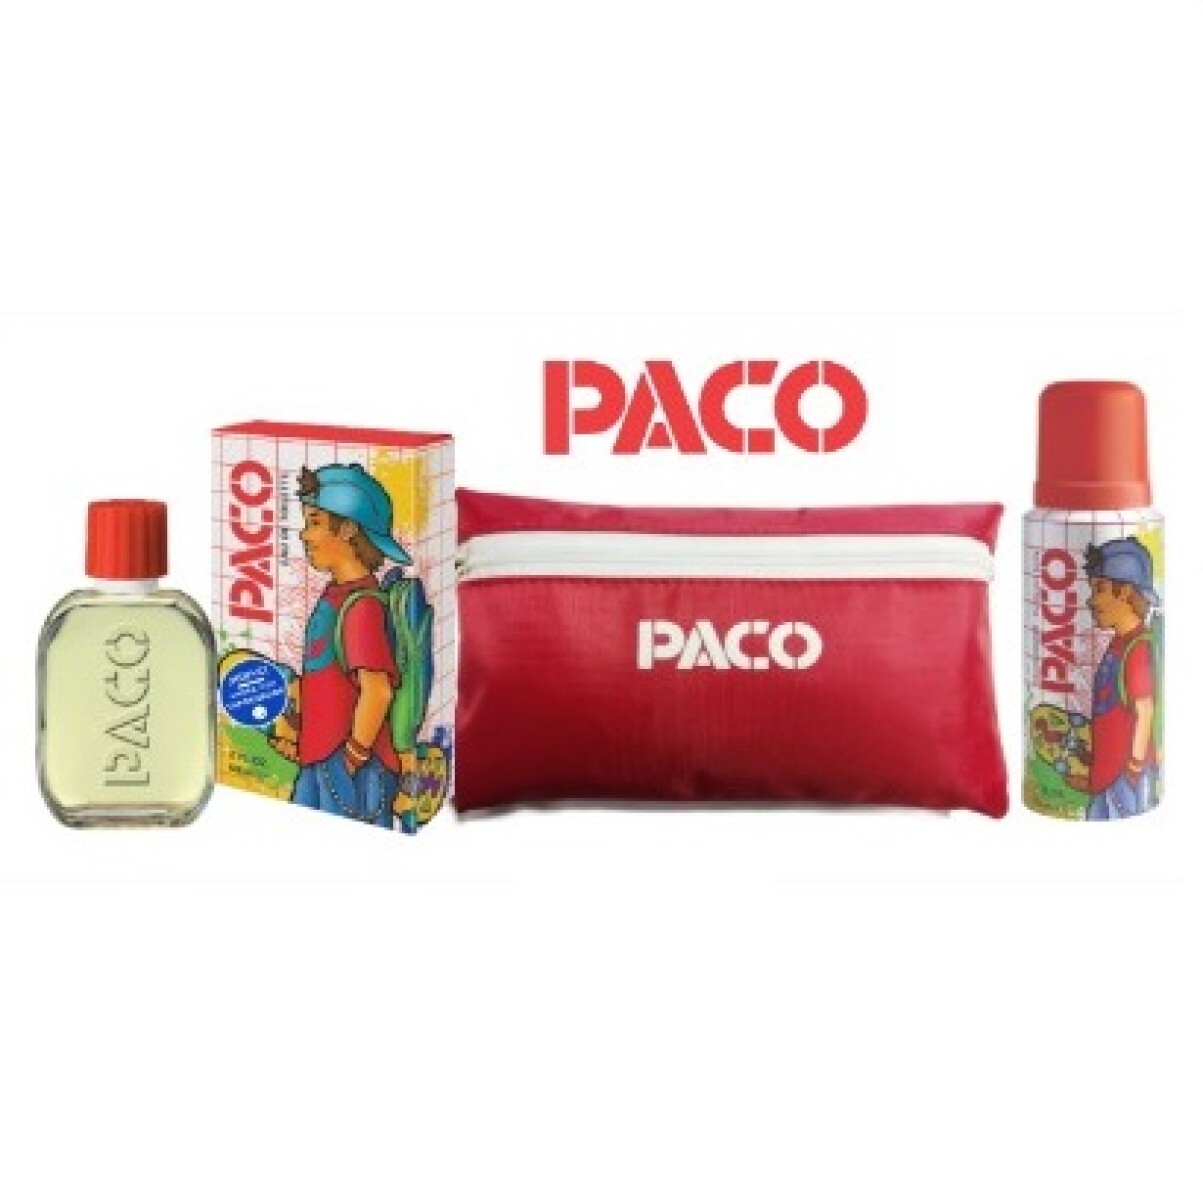 Colonia Paco 60ml+desodorante Aerosol 150ml+cartuchera 